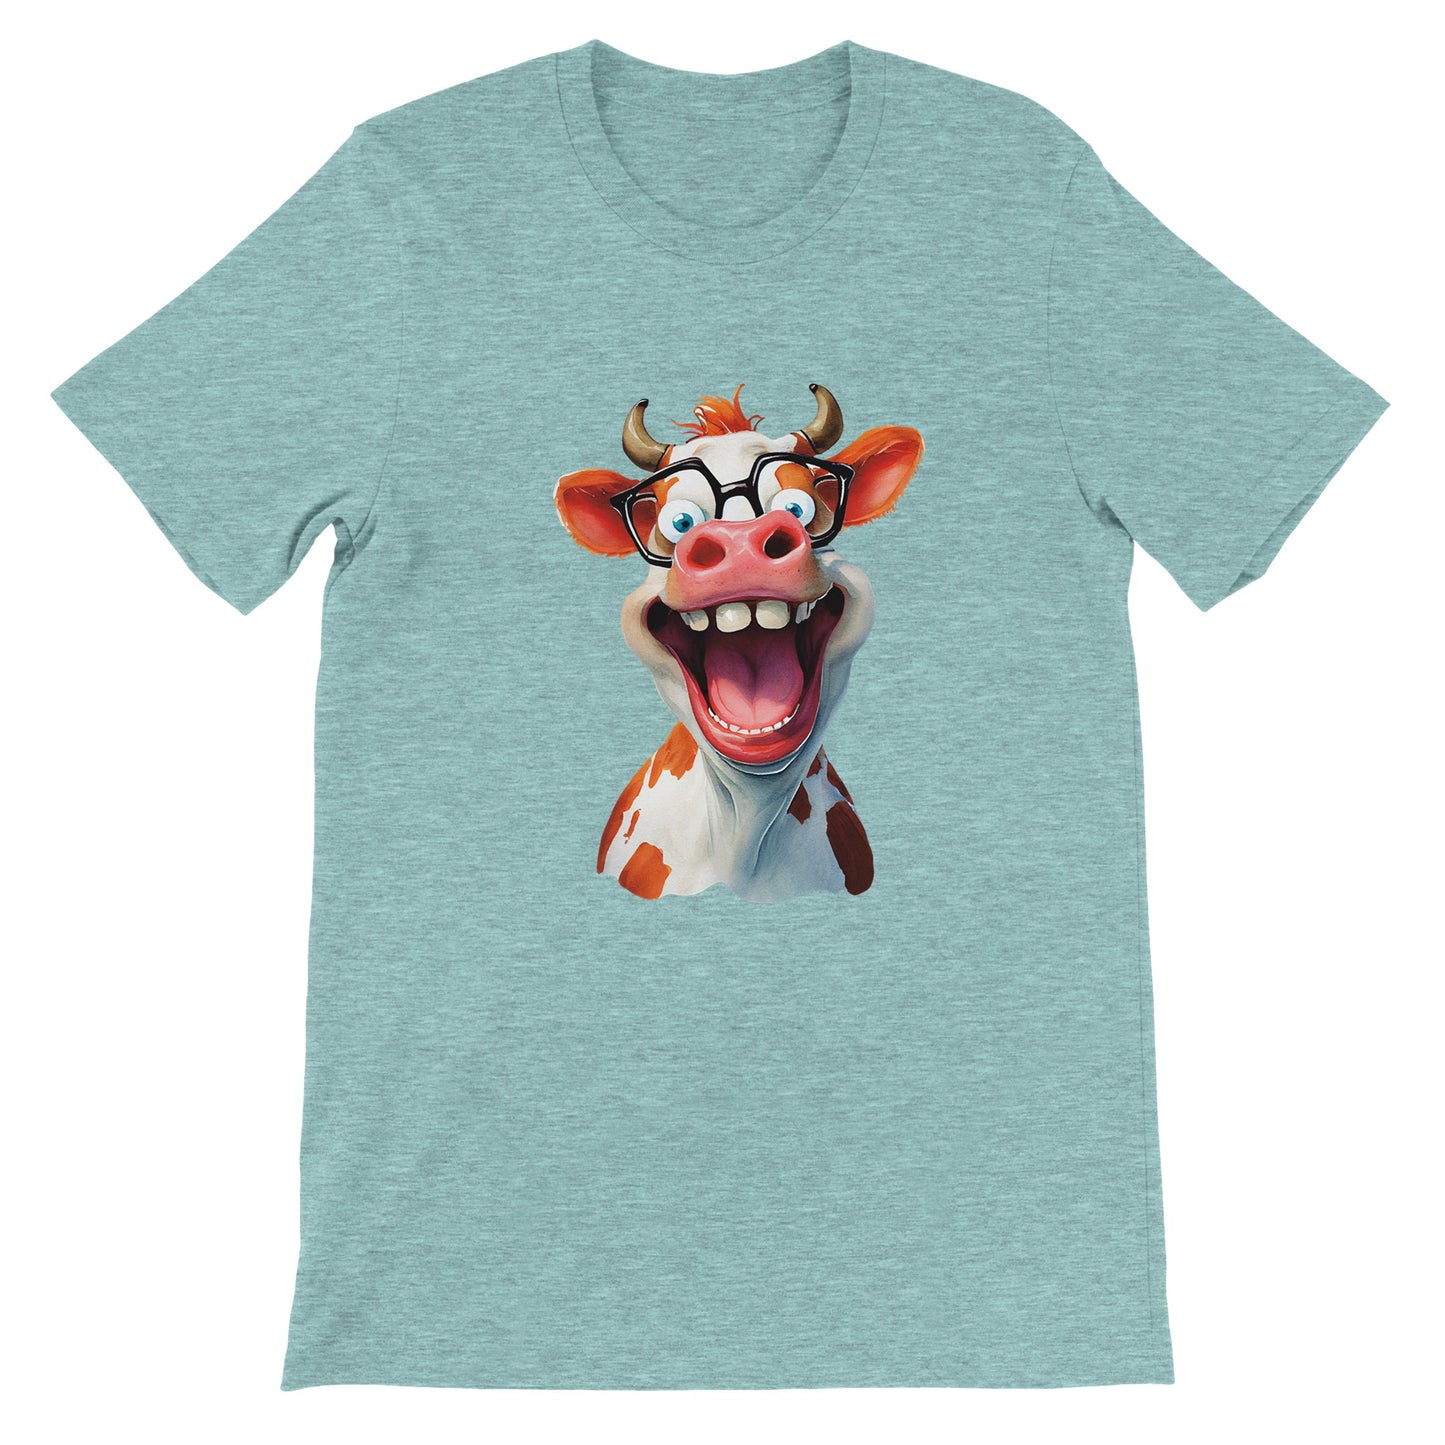 Budget Unisex Crewneck T-shirt/Funny-Cow